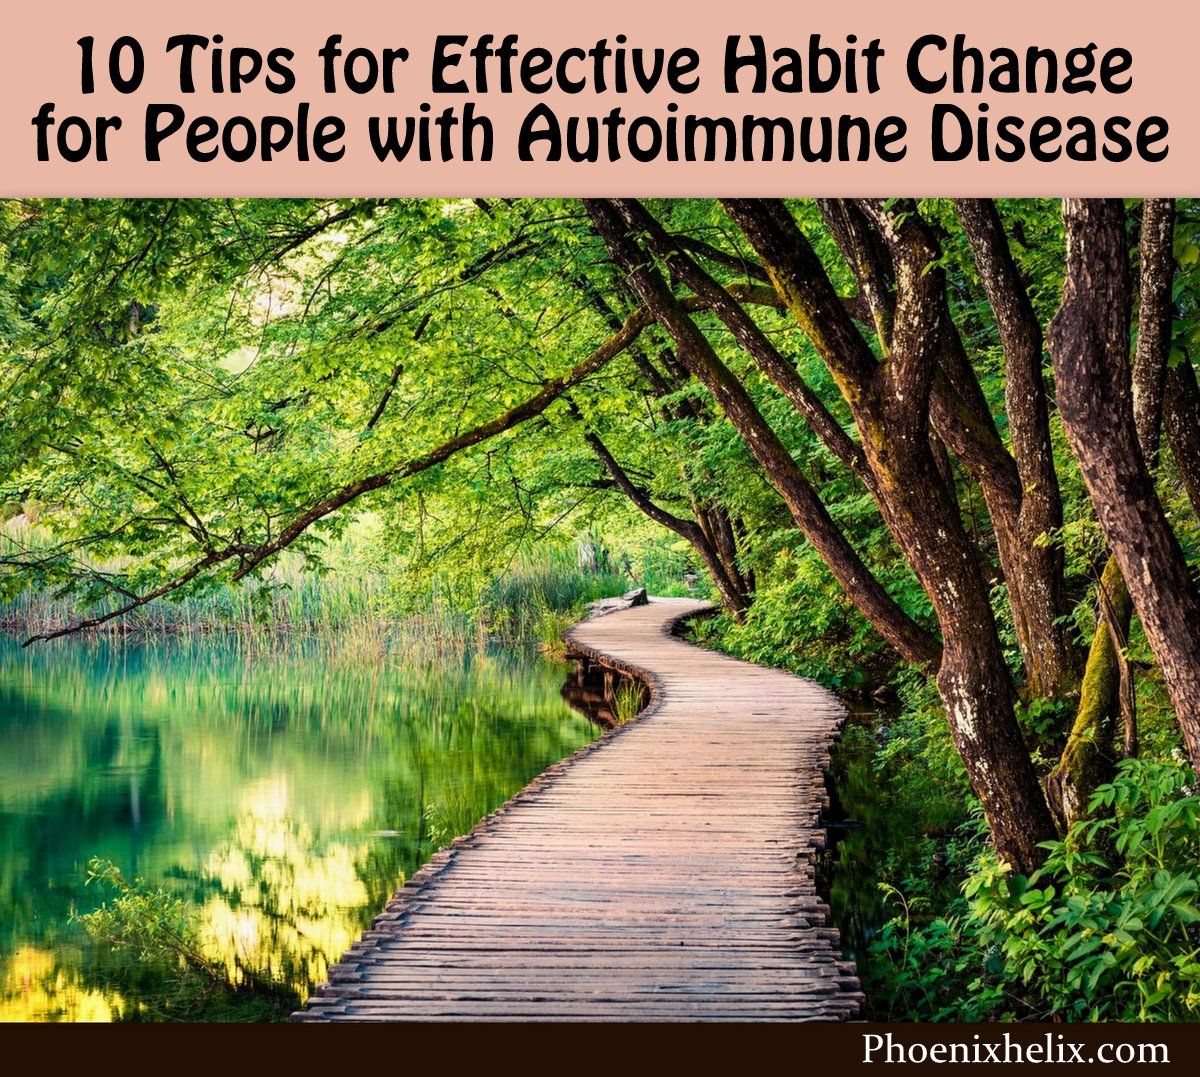 10 Tips for Effective Habit Change for People with Autoimmune Disease | Phoenix Helix